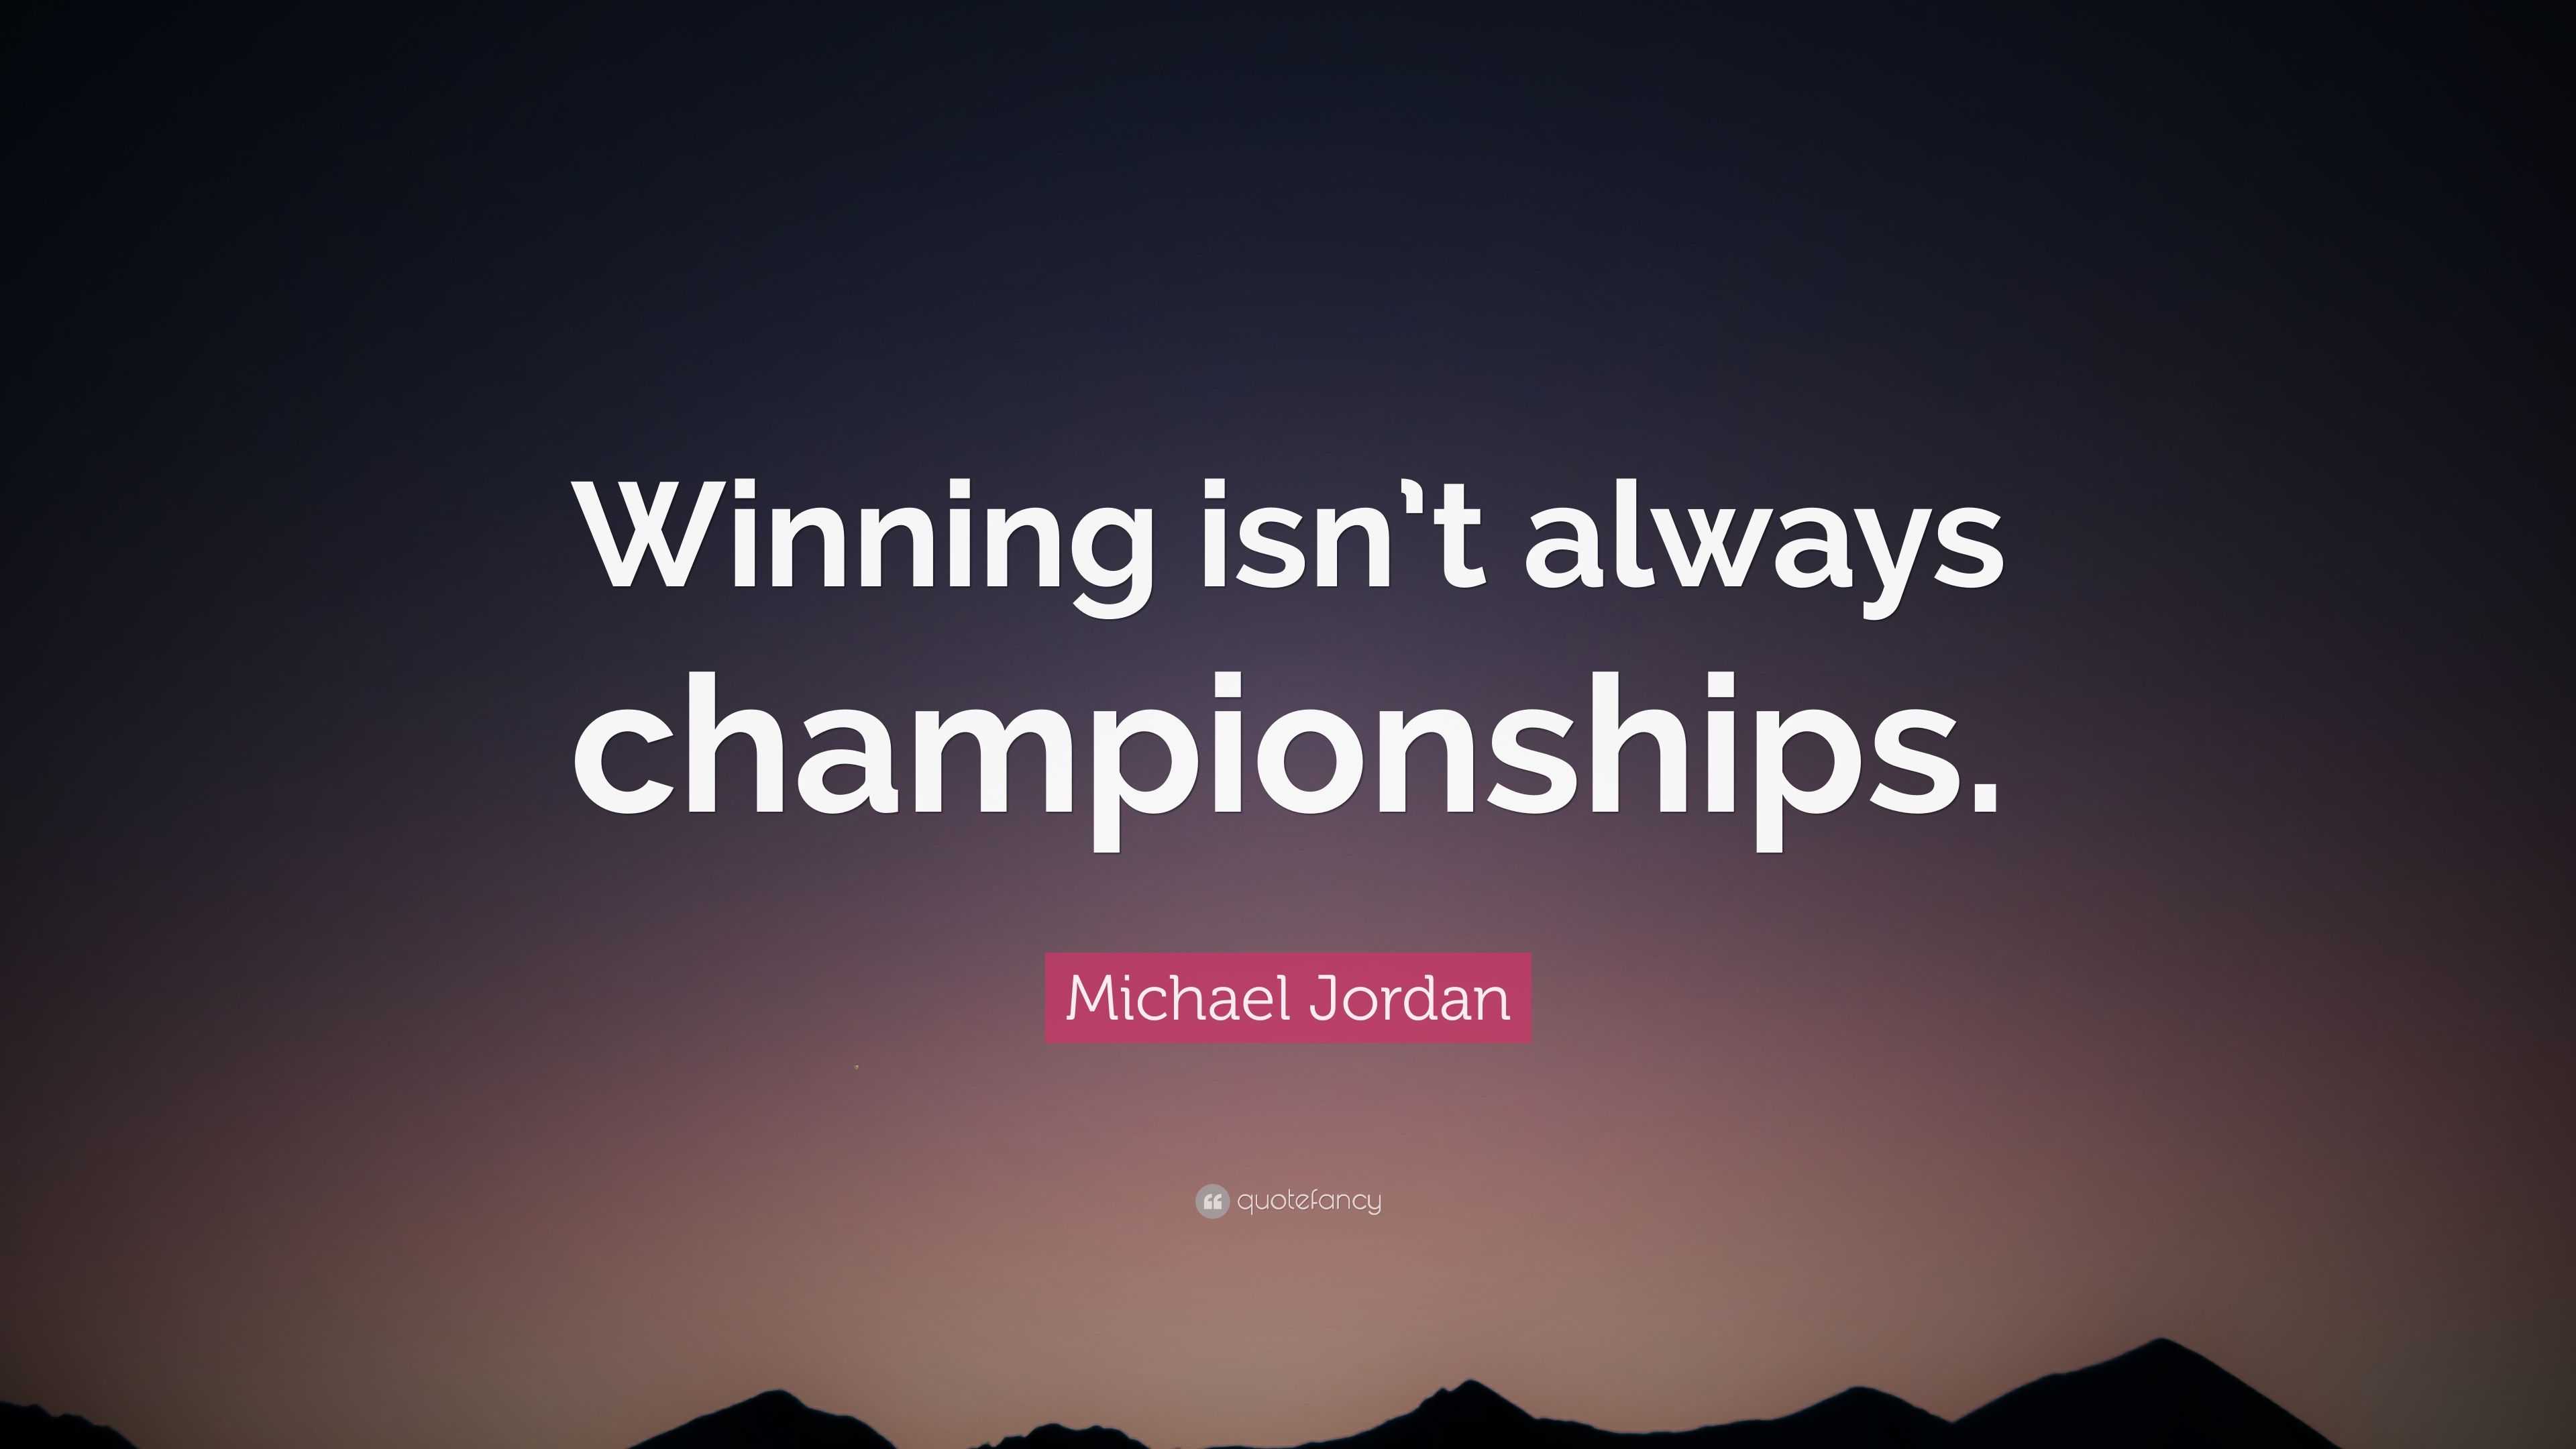 Michael Jordan Quote: “Winning isn’t always championships.”